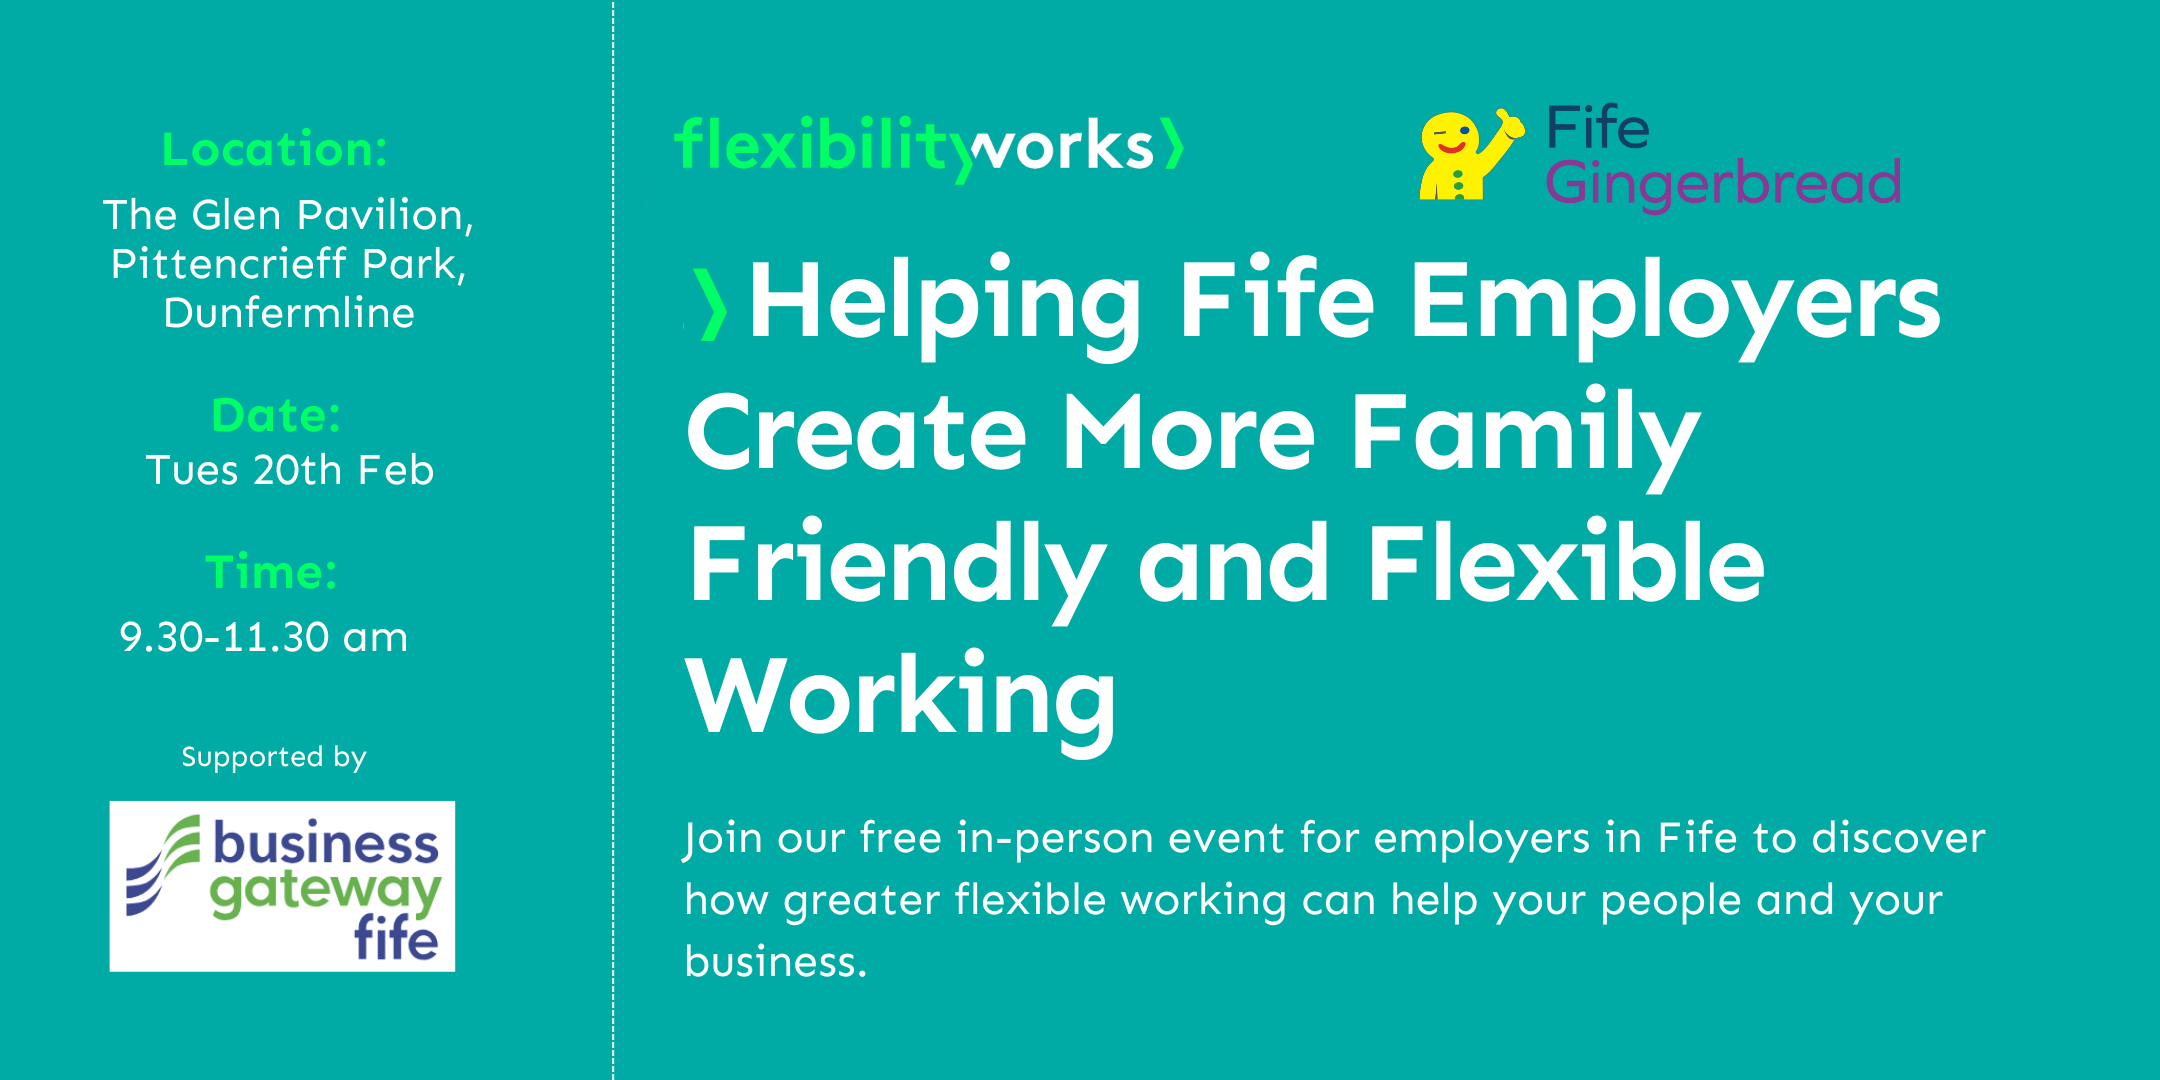 FlexForLife 2021 Flexibility Works